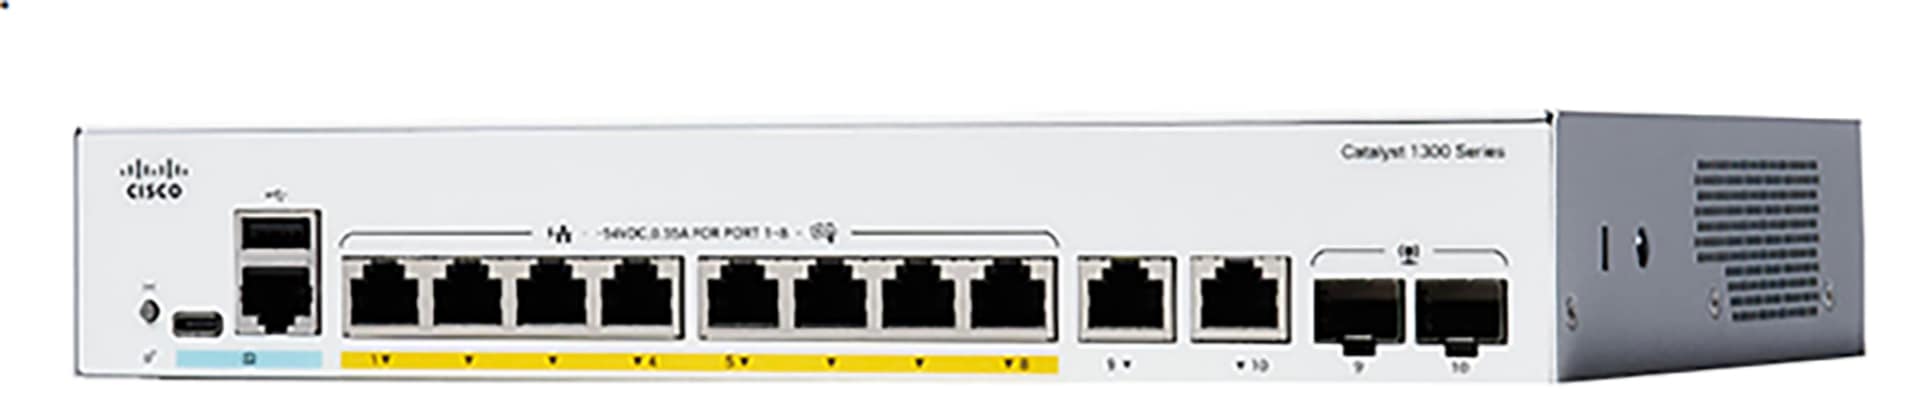 Cisco Catalyst 1300 8-Port Gigabit Ethernet Switch with External Power Supp